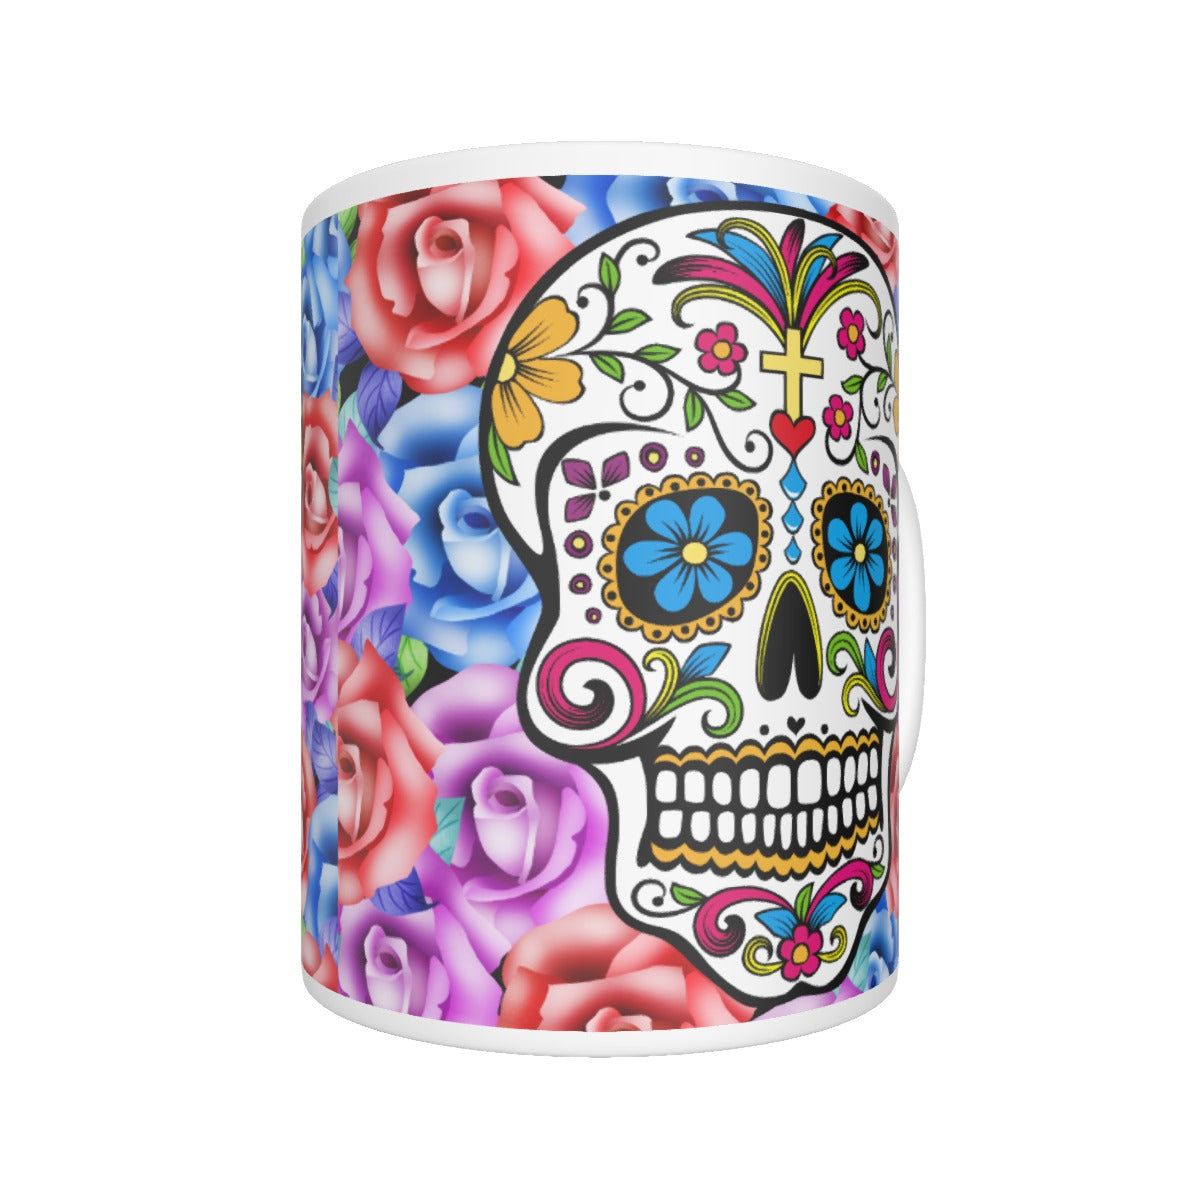 Dia de los muertos sugar skull Ceramics mug